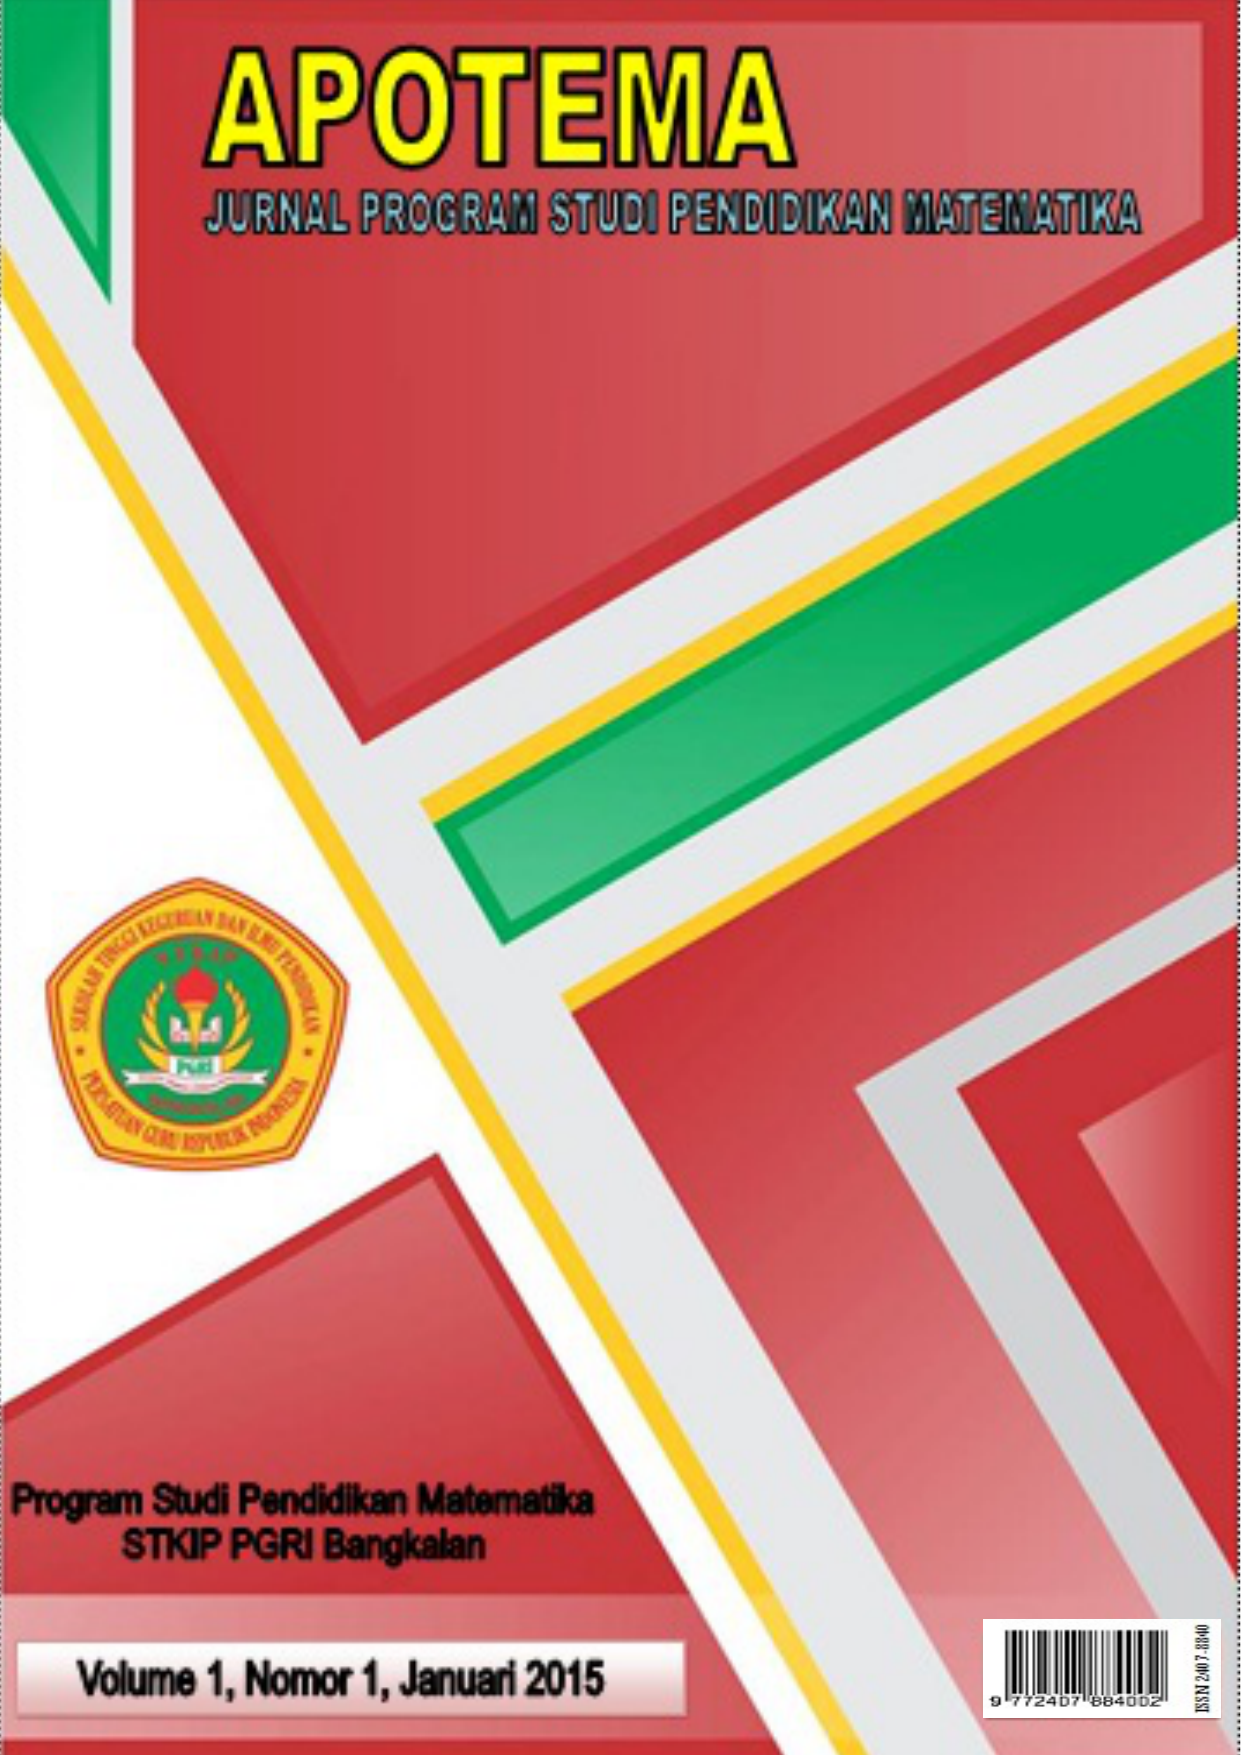 Volume 1 No 1 Januari 2015 ISSN 2407 8840 Jurnal APOTEMA adalah jurnal ilmiah yang diterbitkan Prodi Pendidikan Matematika STKIP PGRI Bangkalan secara